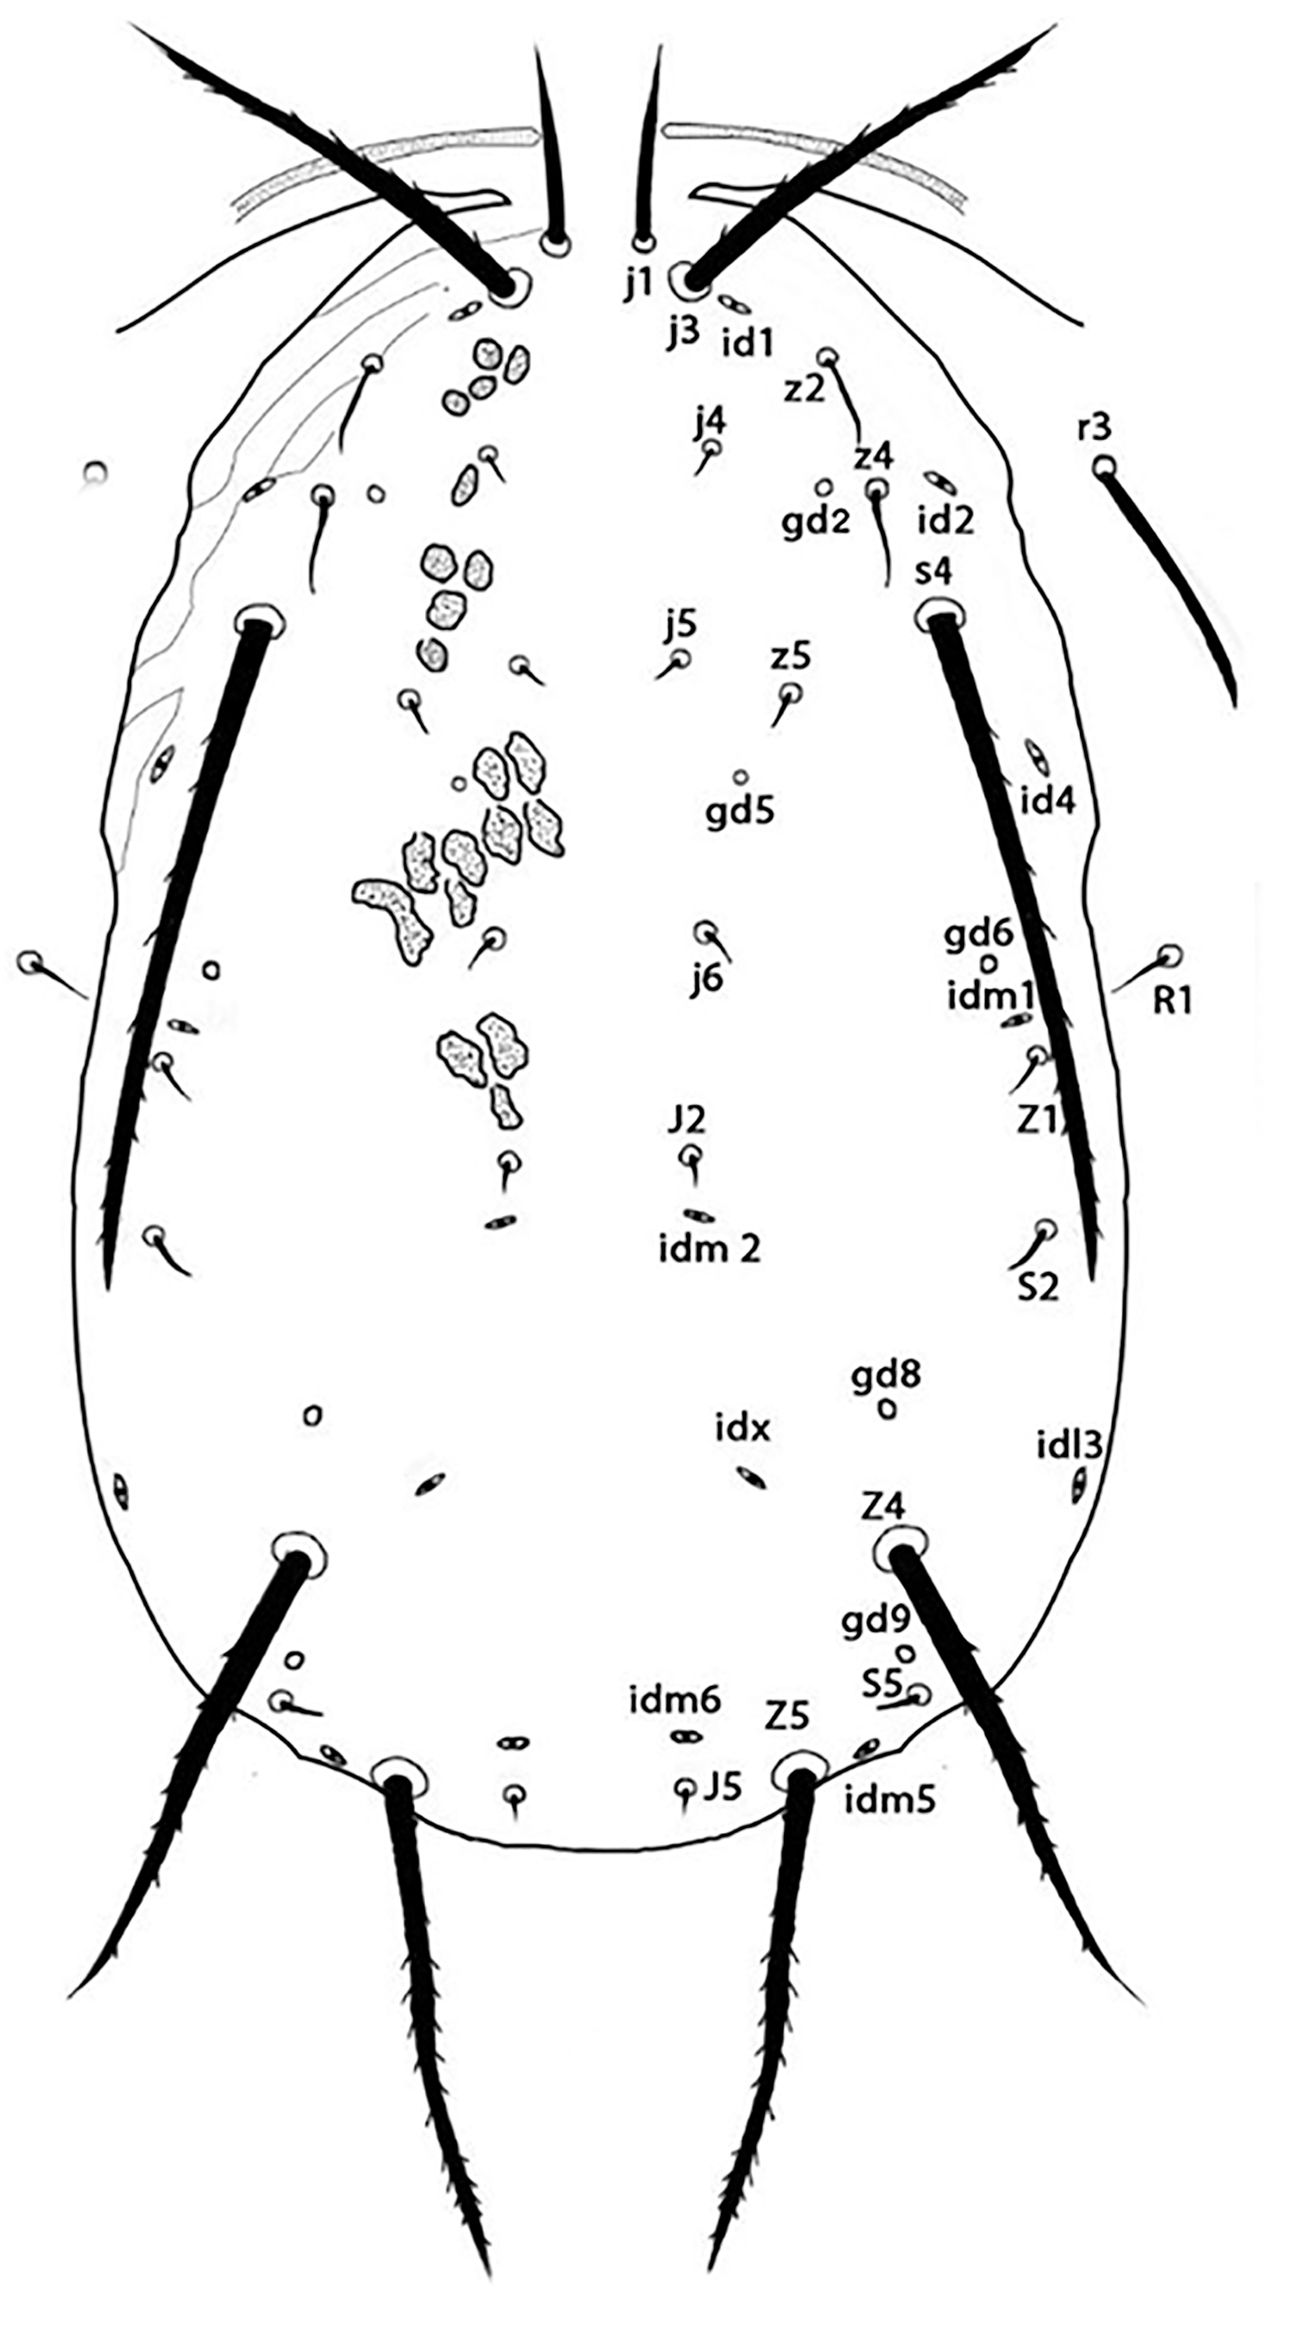 Neoparaphytoseius caatinga